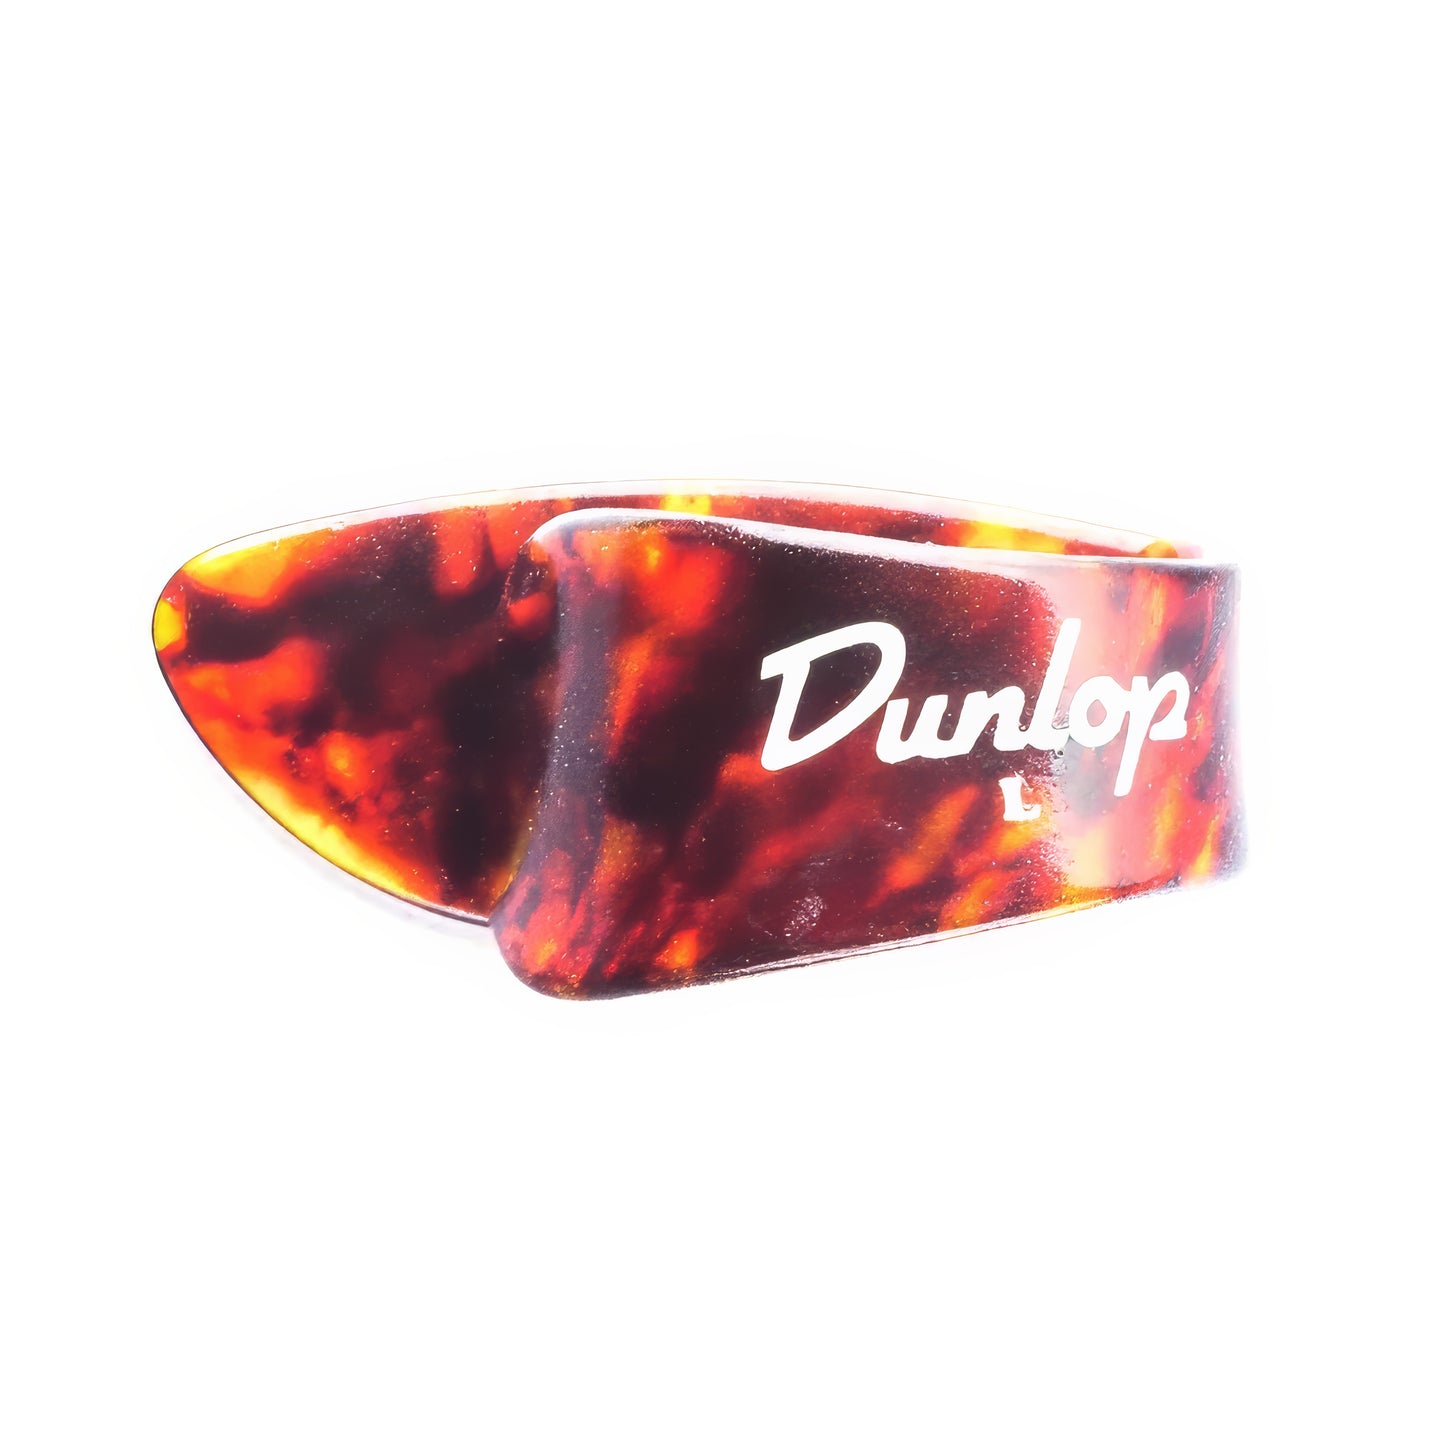 Dunlop Shell Plastic Thumbpick, Large